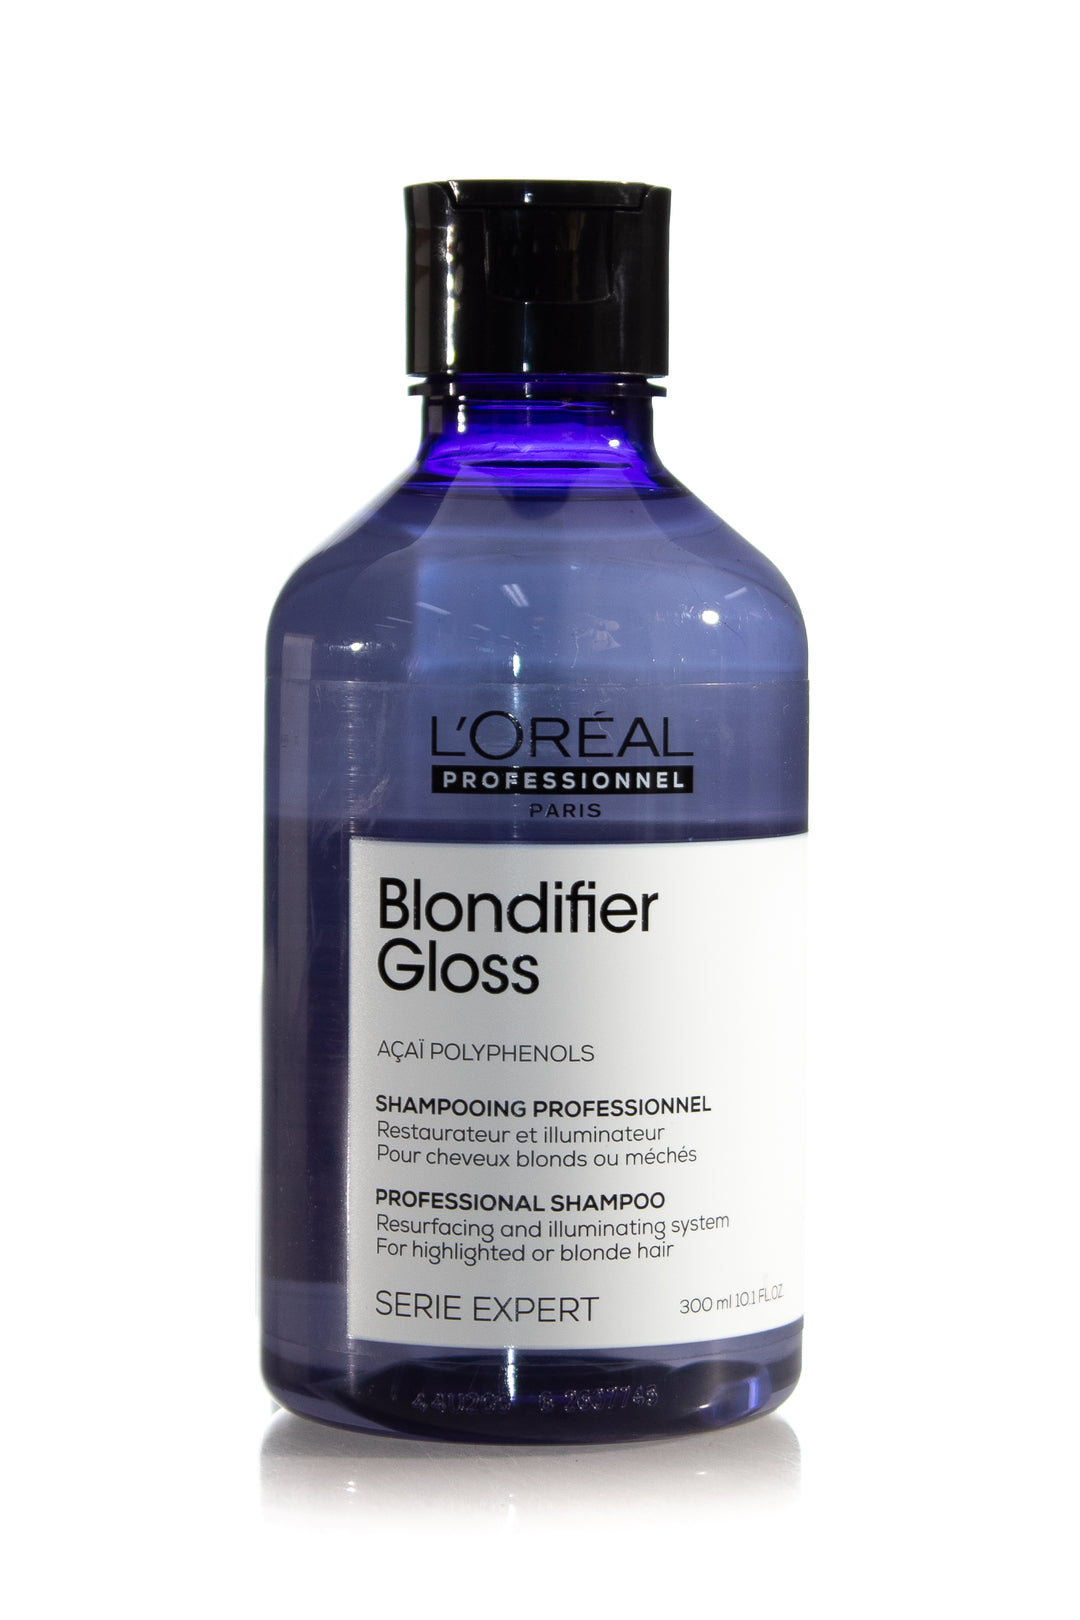 L'OREAL Blondifier Gloss Shampoo | 300ml